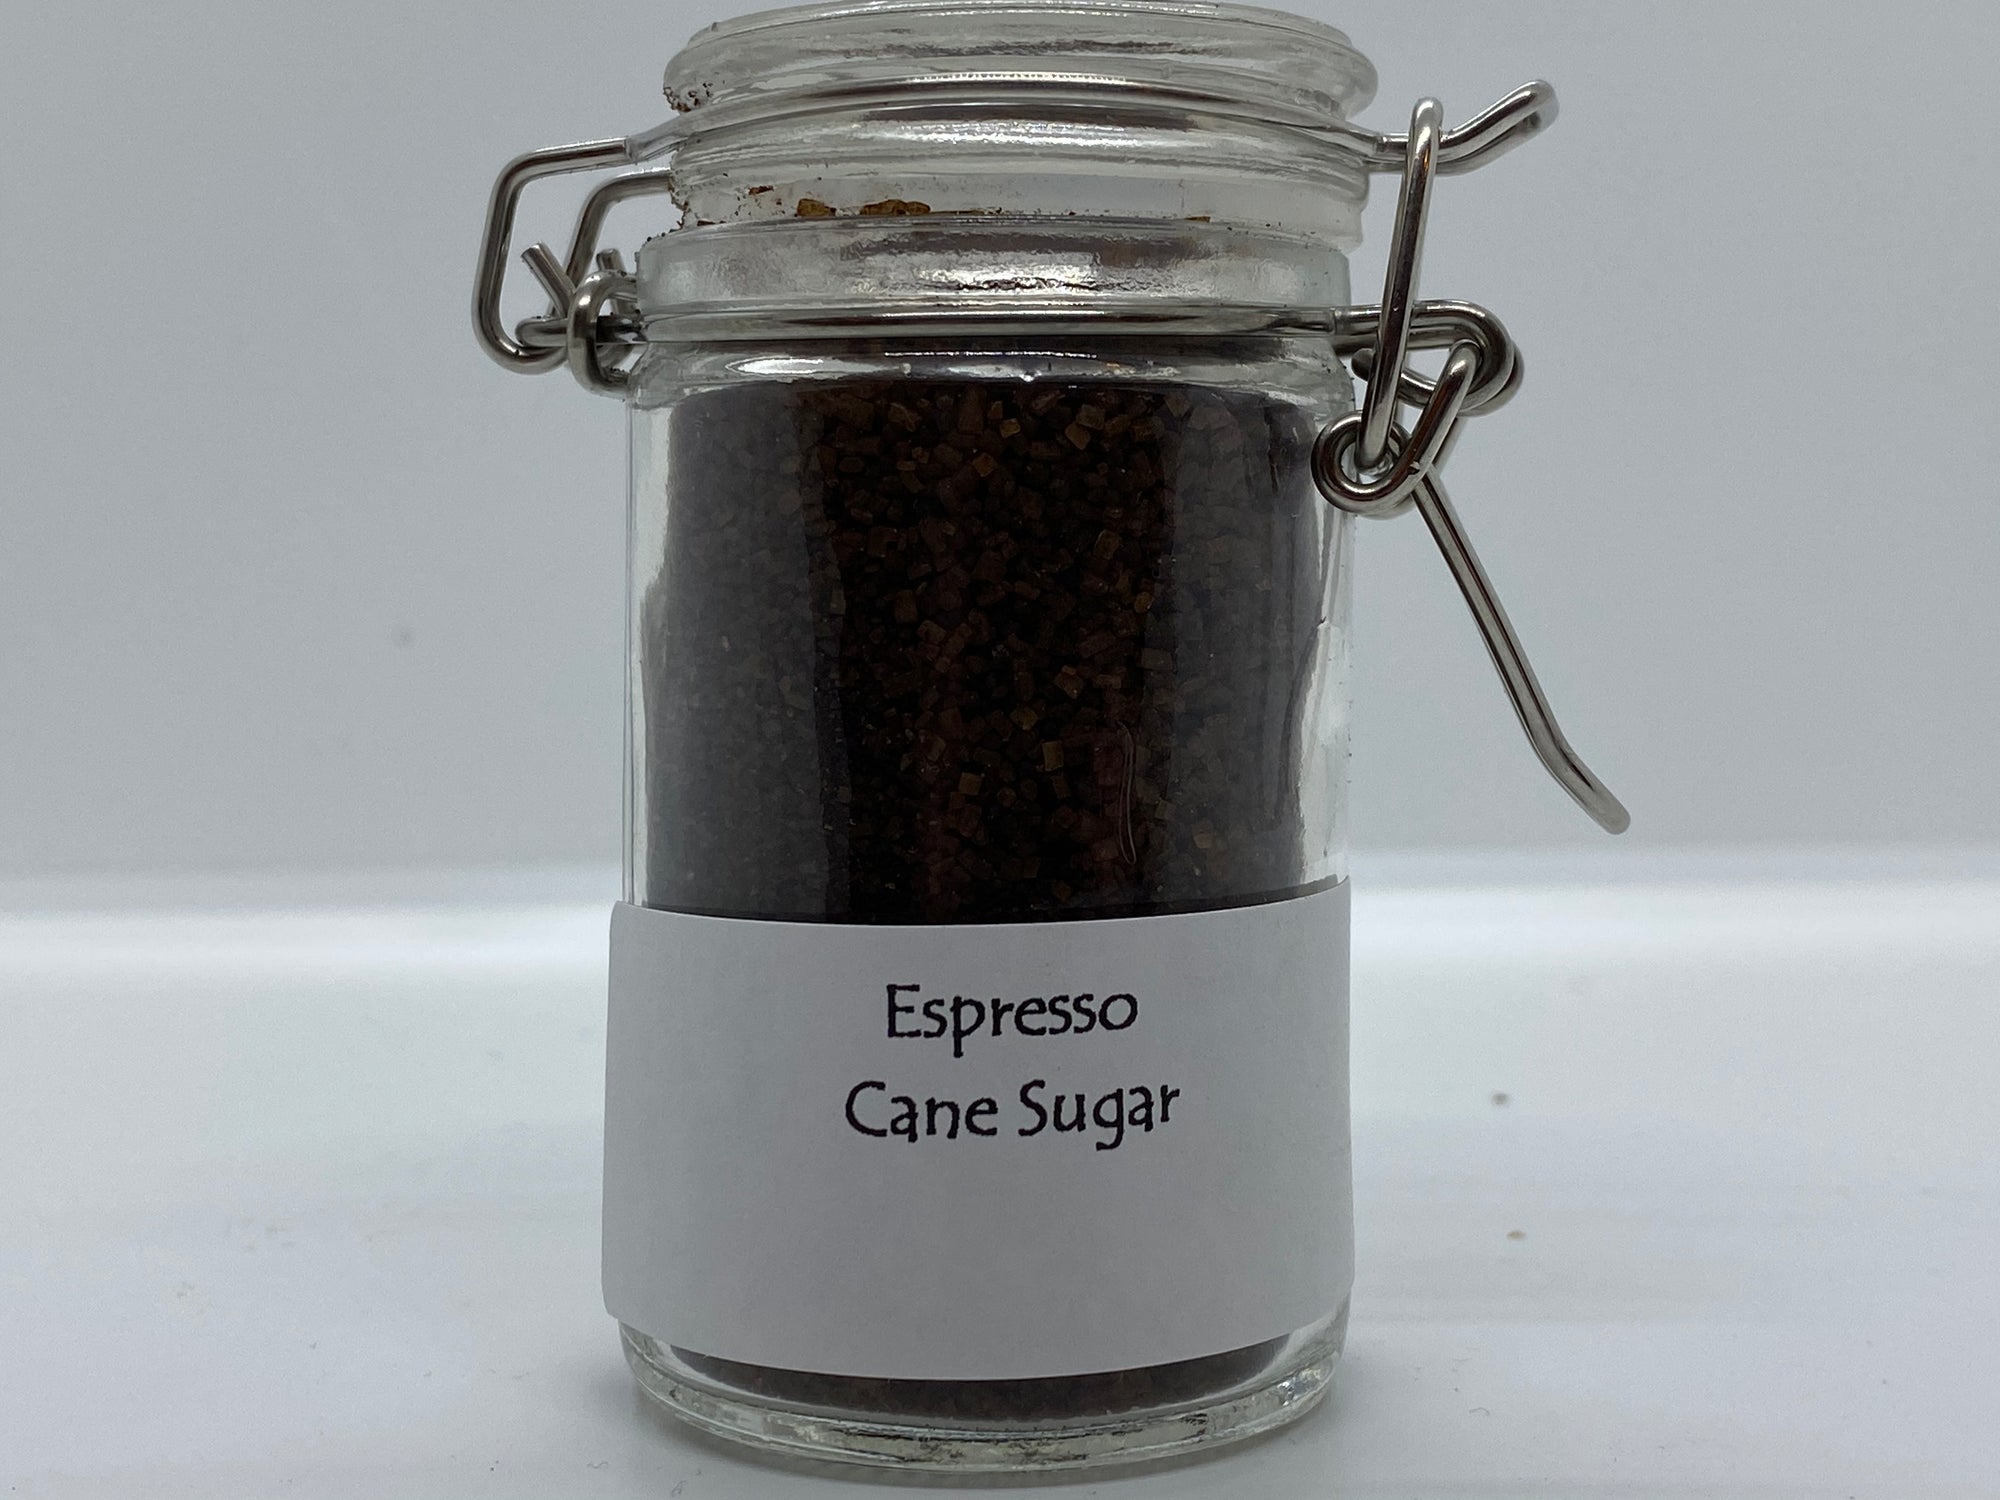 Espresso Sugar